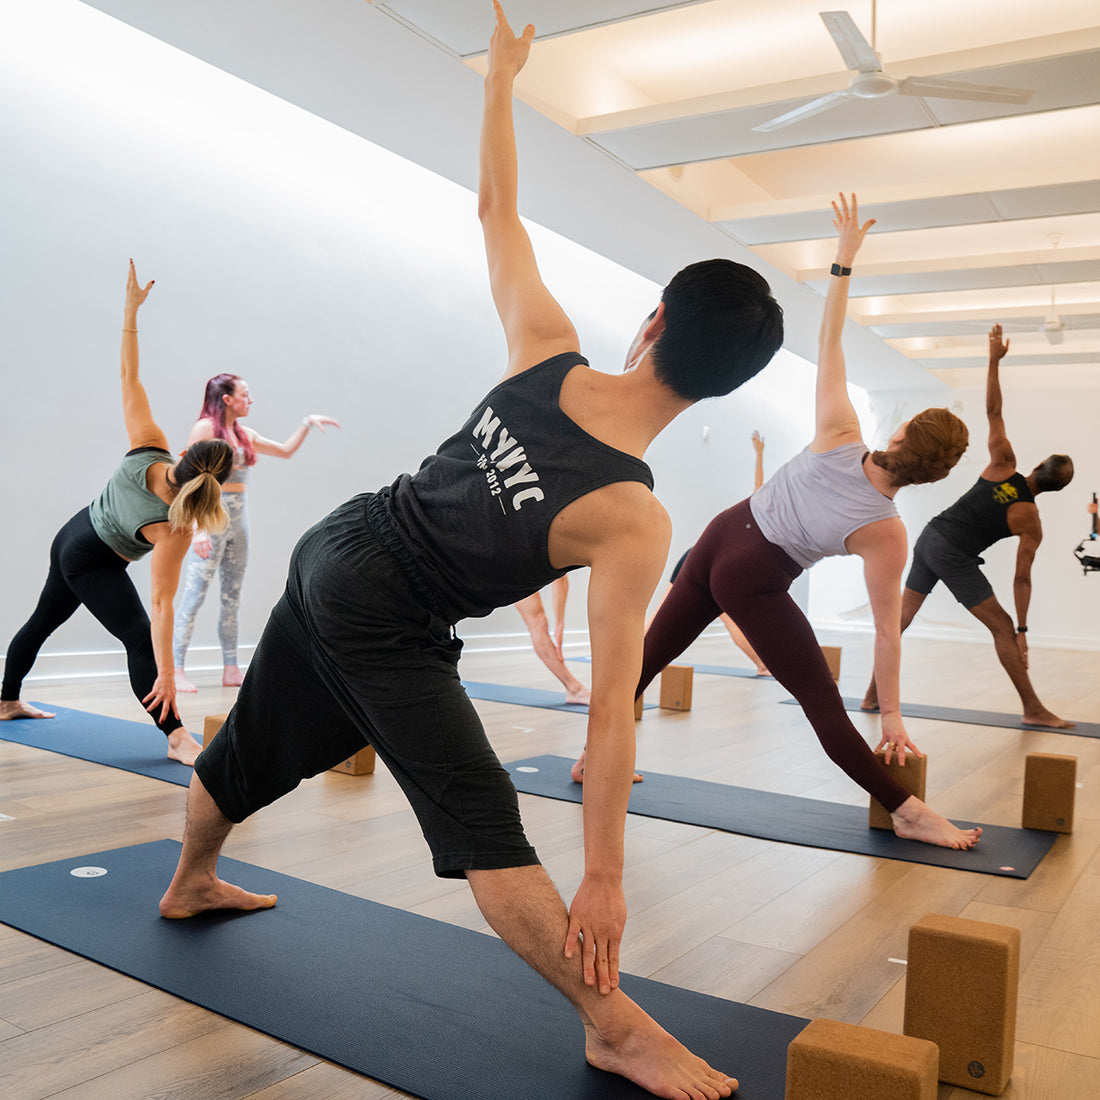 Hot yoga class at Modo Yoga NYC by Focus 4 Design Studio